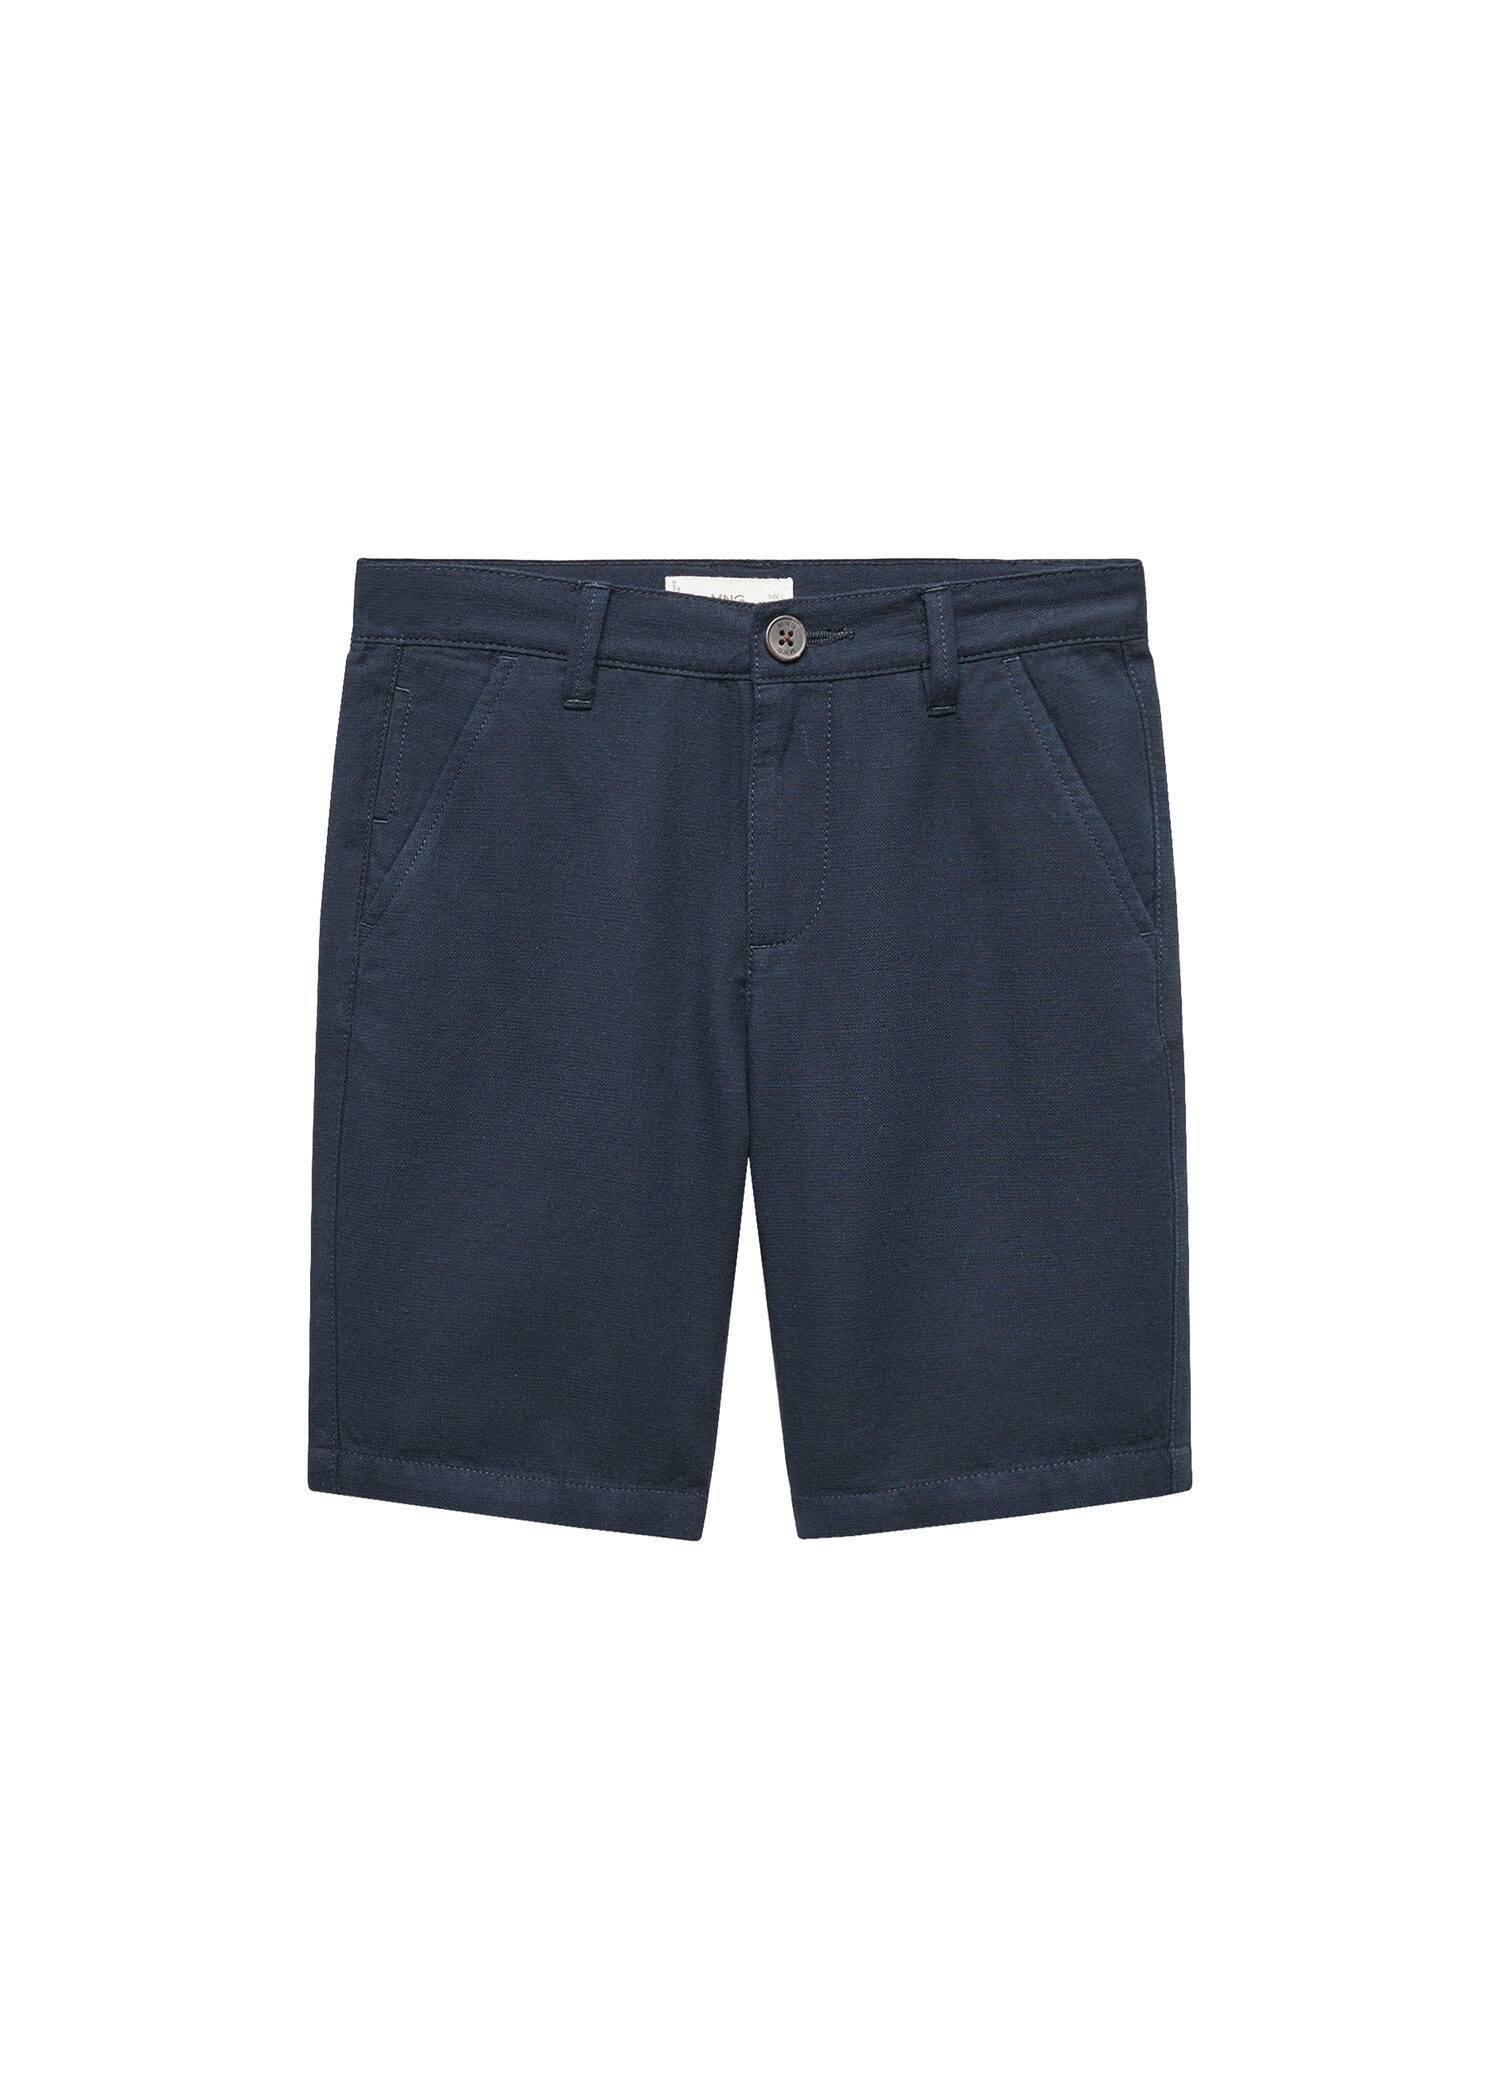 Mango - Navy Linen Bermuda Shorts, Kids Boys